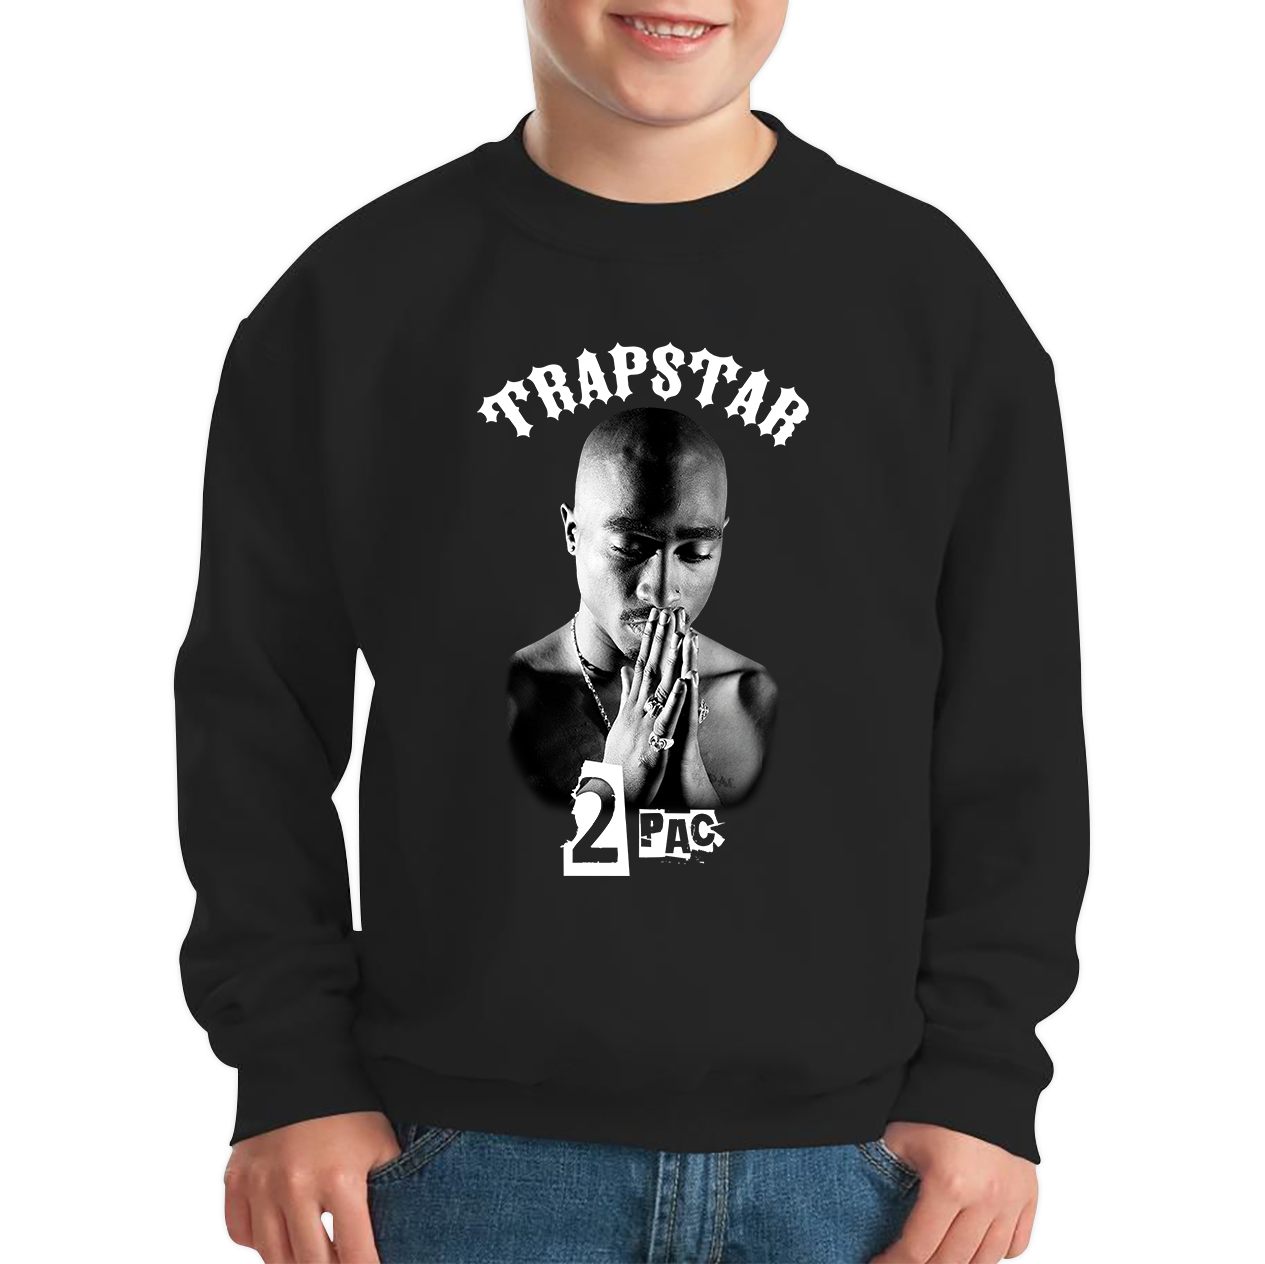 Trapstar 2pac Jumper Tupac Shakur American Rapper Hip Hop Lovers Music Gift Kids Sweatshirt